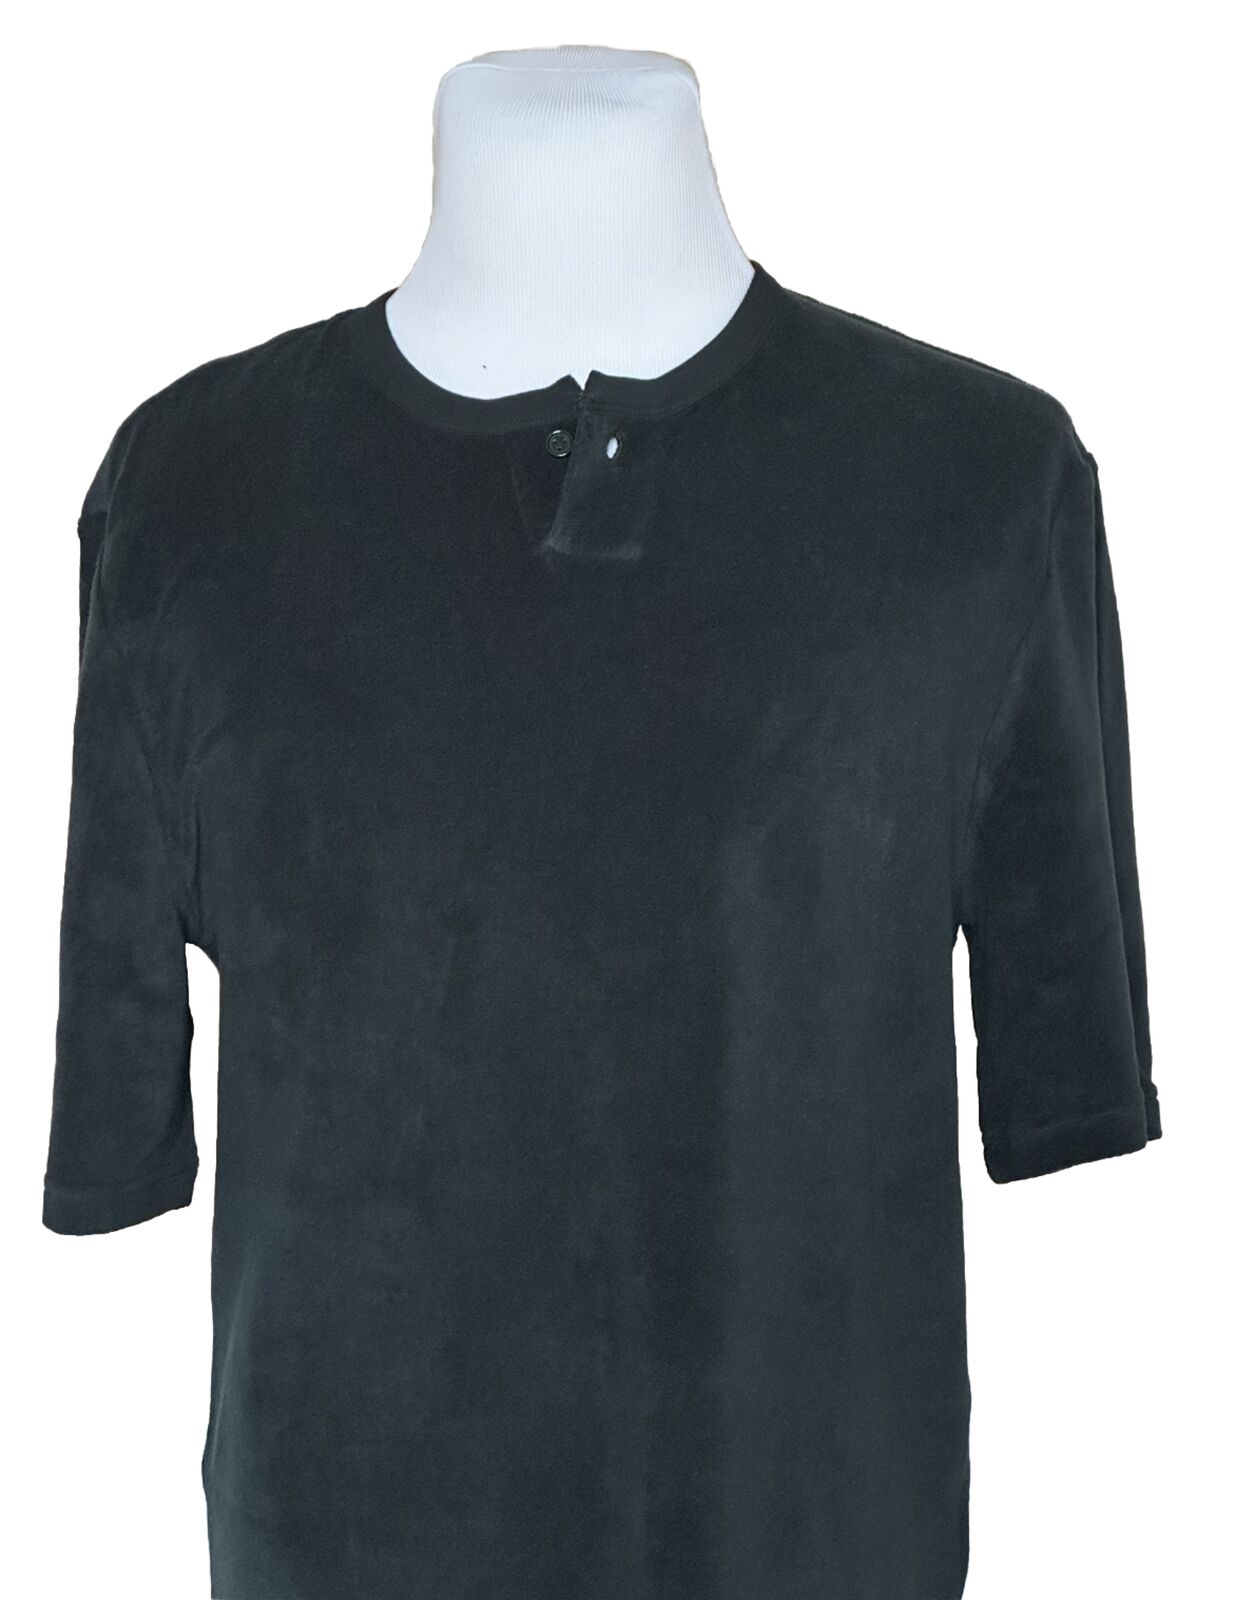 Neu mit Etikett: 550 $ Bottega Veneta Herren-T-Shirt aus Frottee-Jersey Grün XL Italien 656849